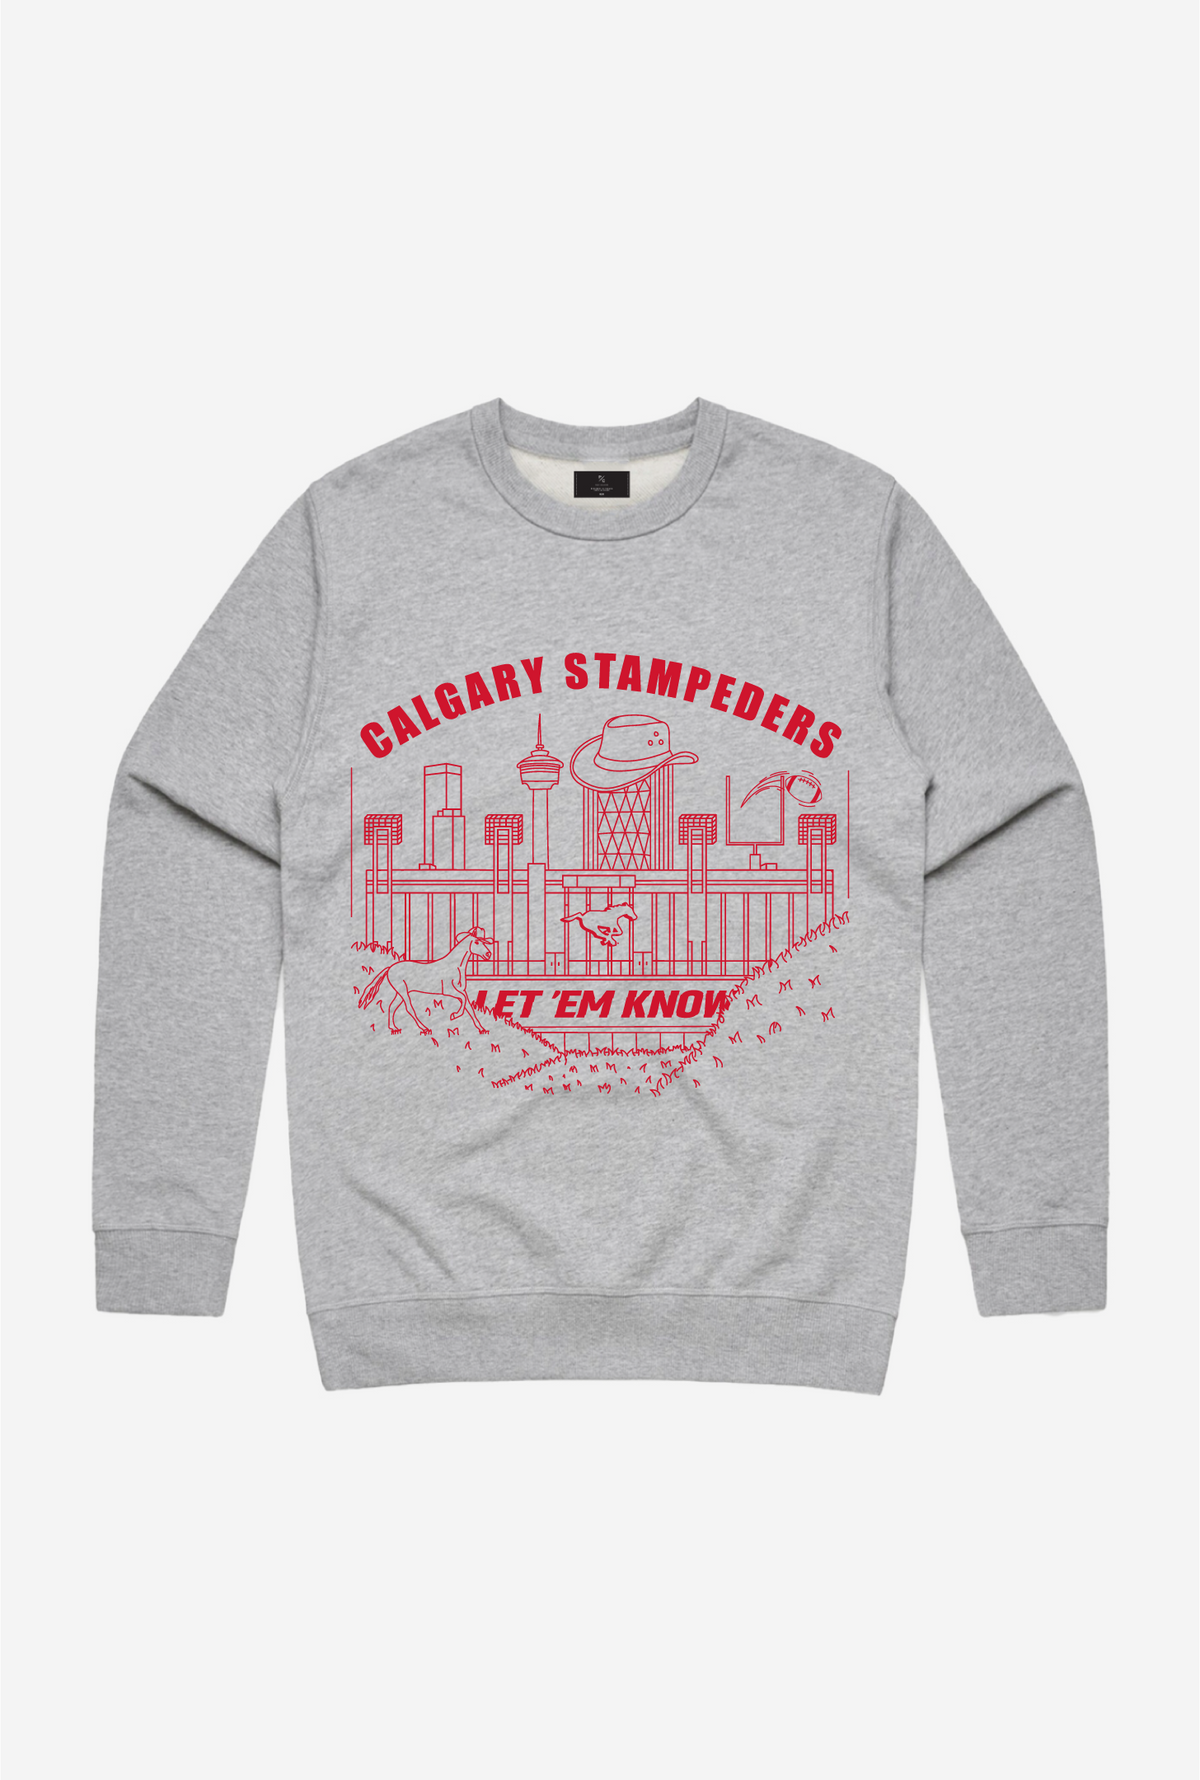 Calgary Stampeders Let 'em Know Crewneck - Ash